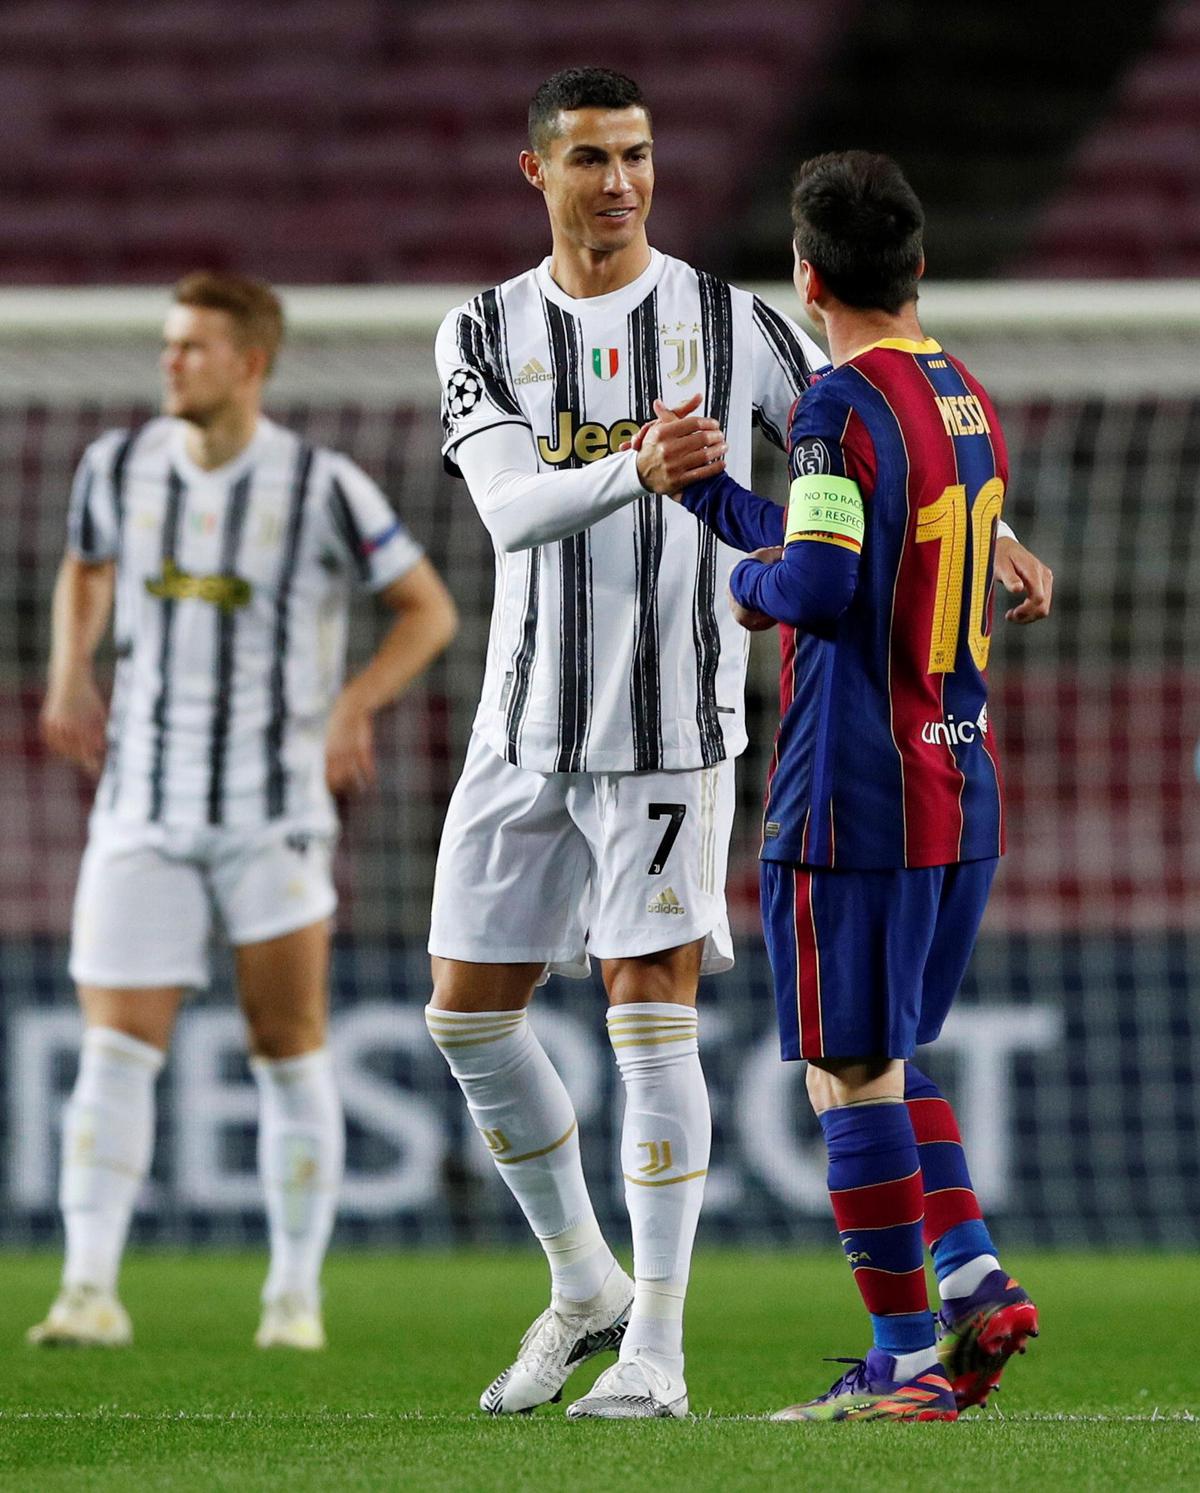 How Italian - Cristiano Ronaldo & Leo Messi playing chess